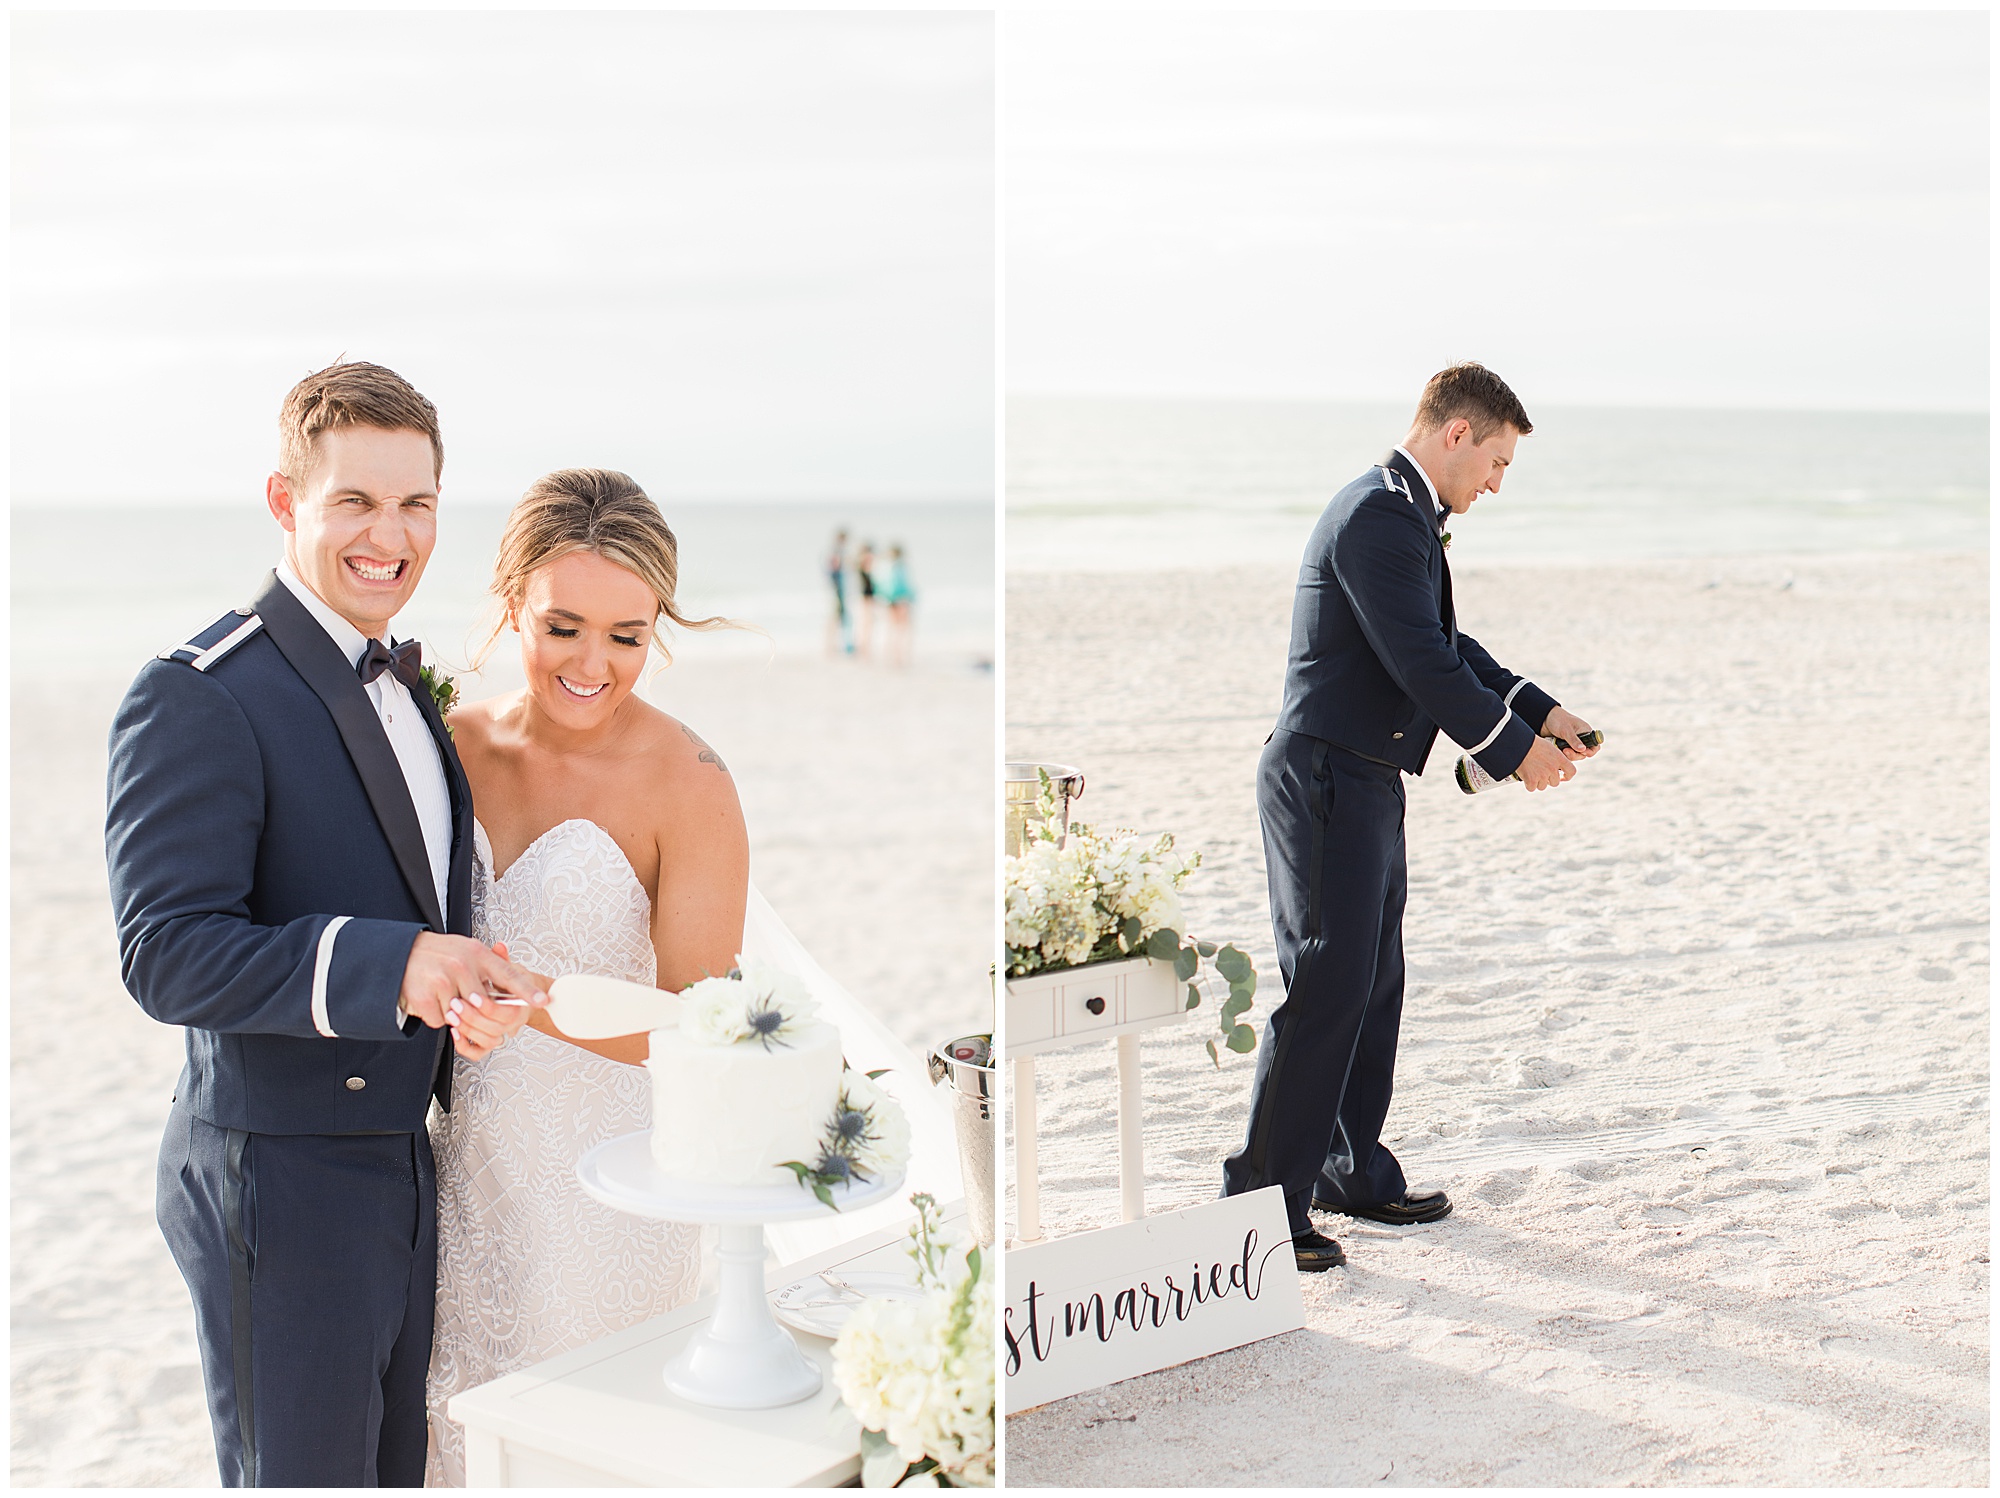 Jace & Anton, Pass-A-Grille Beach, St. Petersburg Florida wedding, Kelley Stinson Photography, beach wedding, beach cake cutting